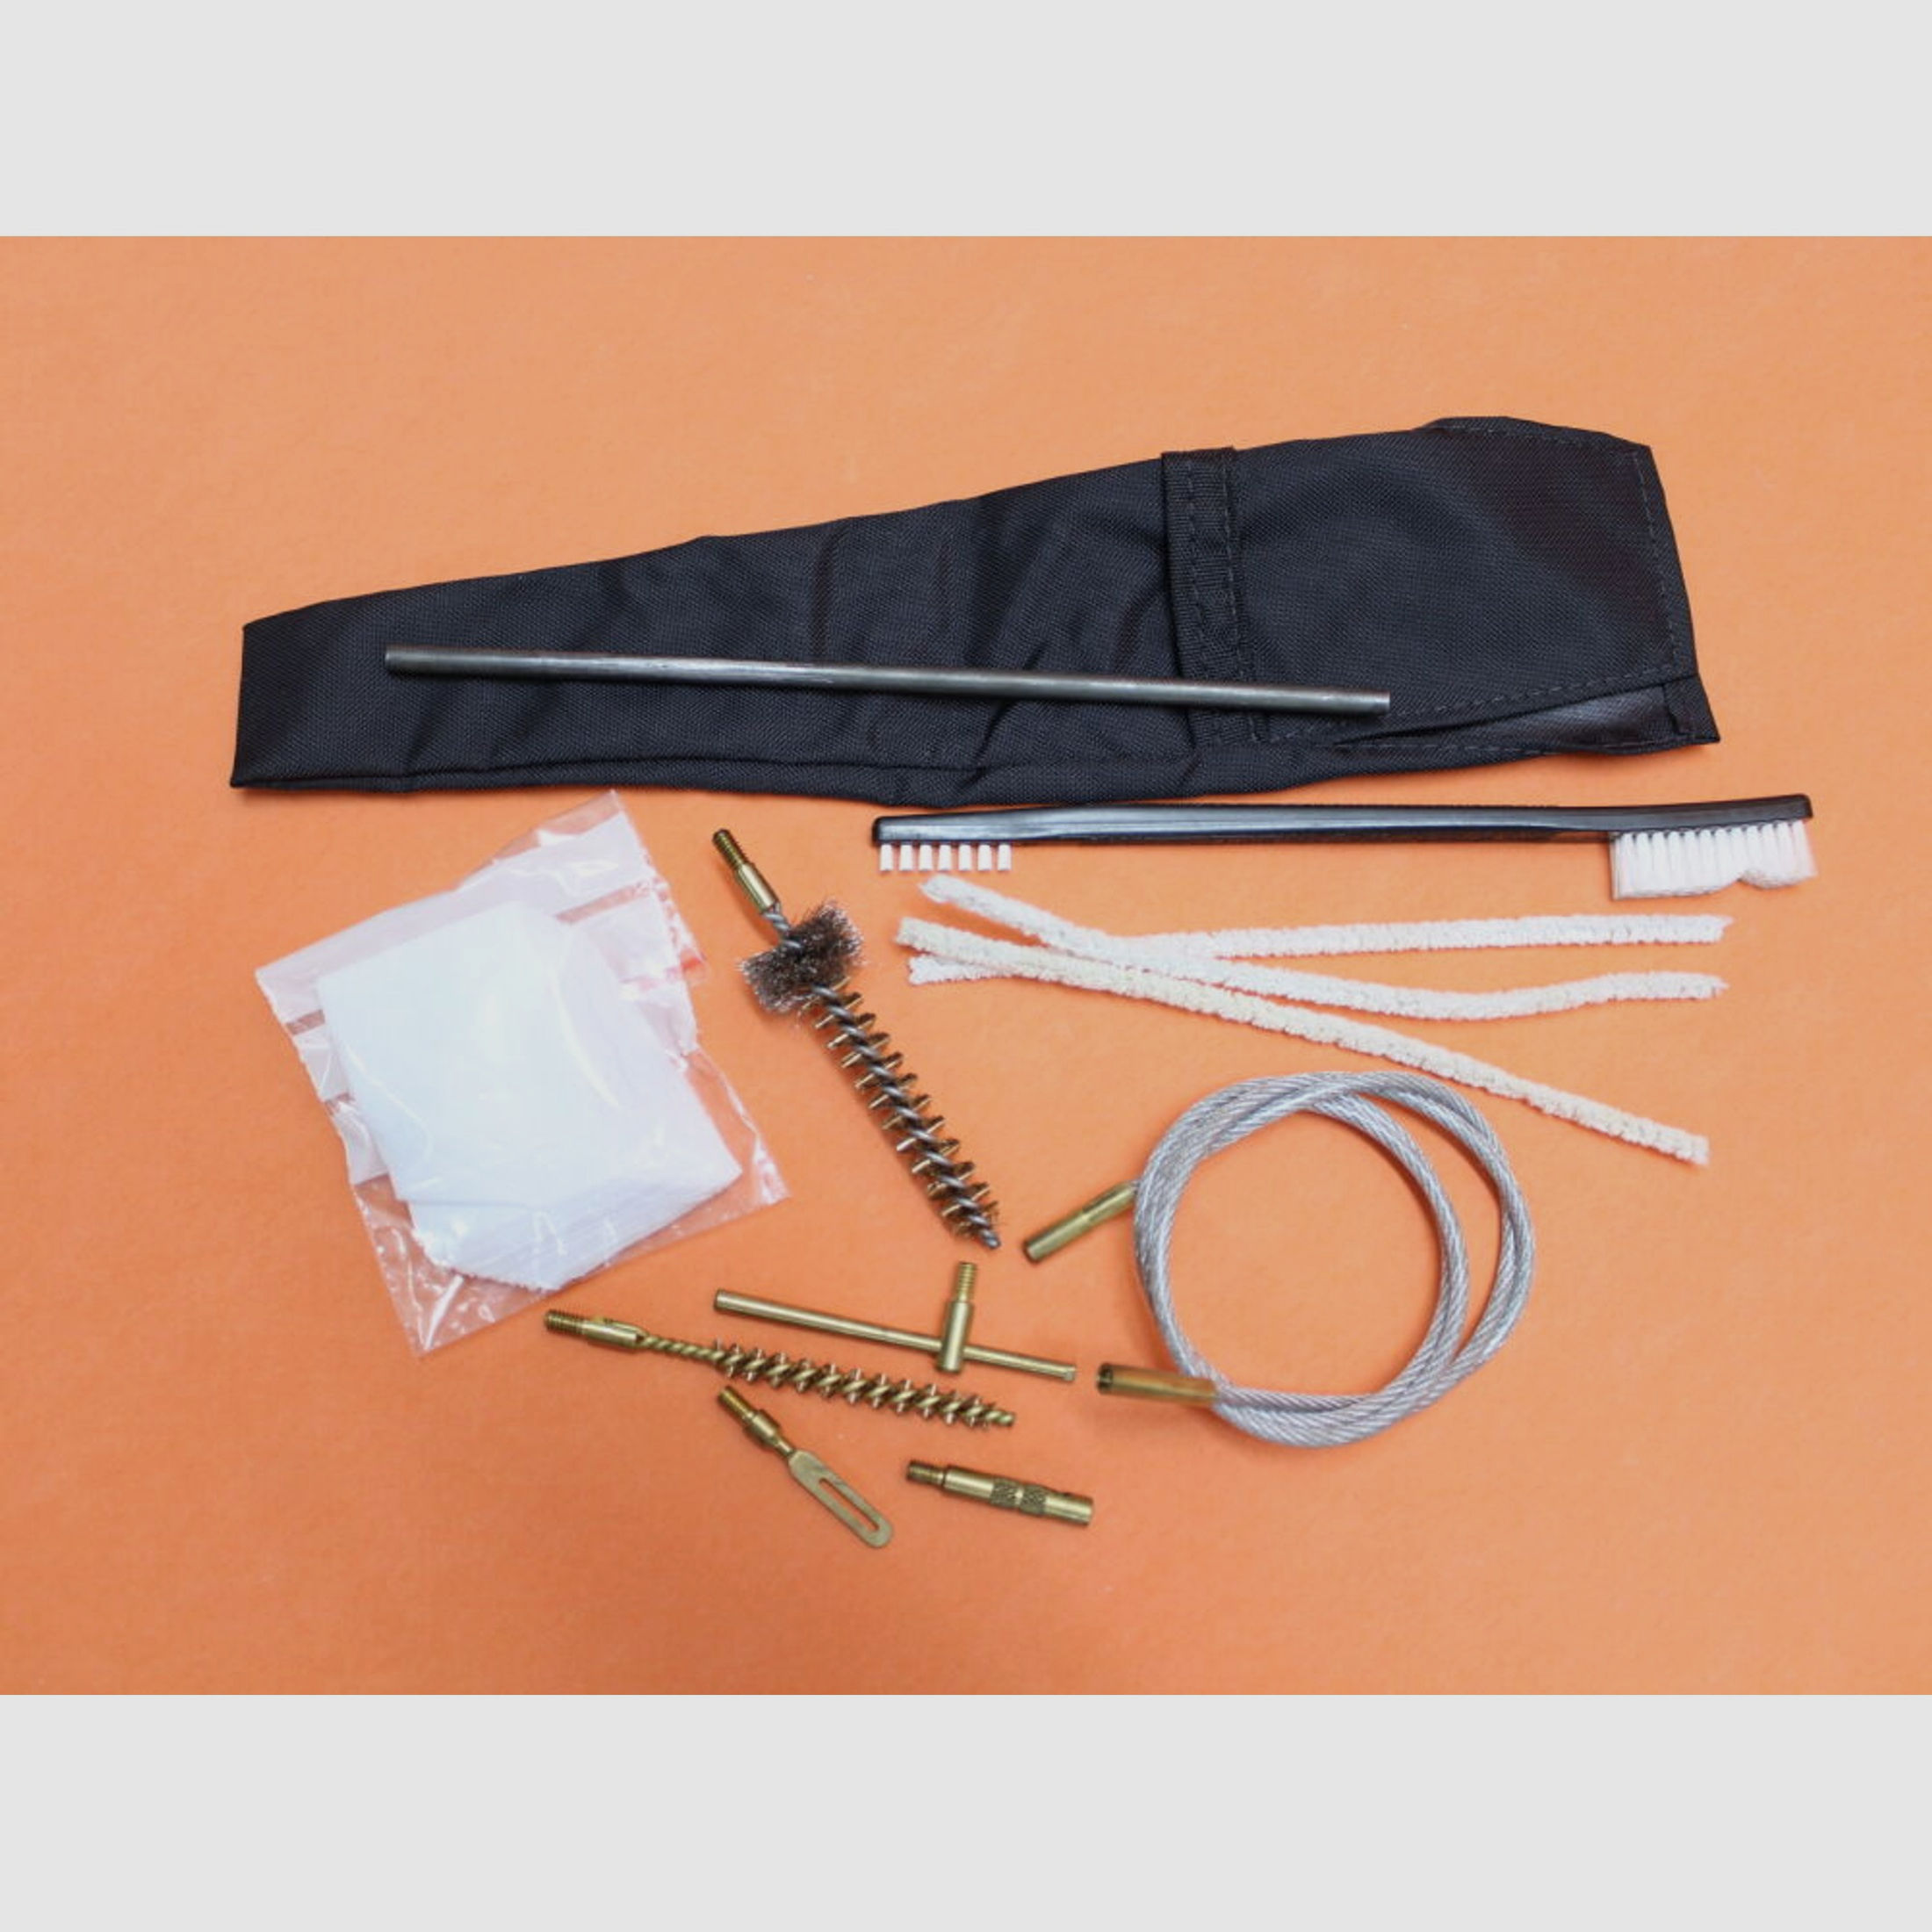 OTIS	 AR-15: Buttstock Cleaning Kit M16 OTIS (FG-224-2) Reinigungsgerät für Kolbenfach AR-15 A2 Schaft